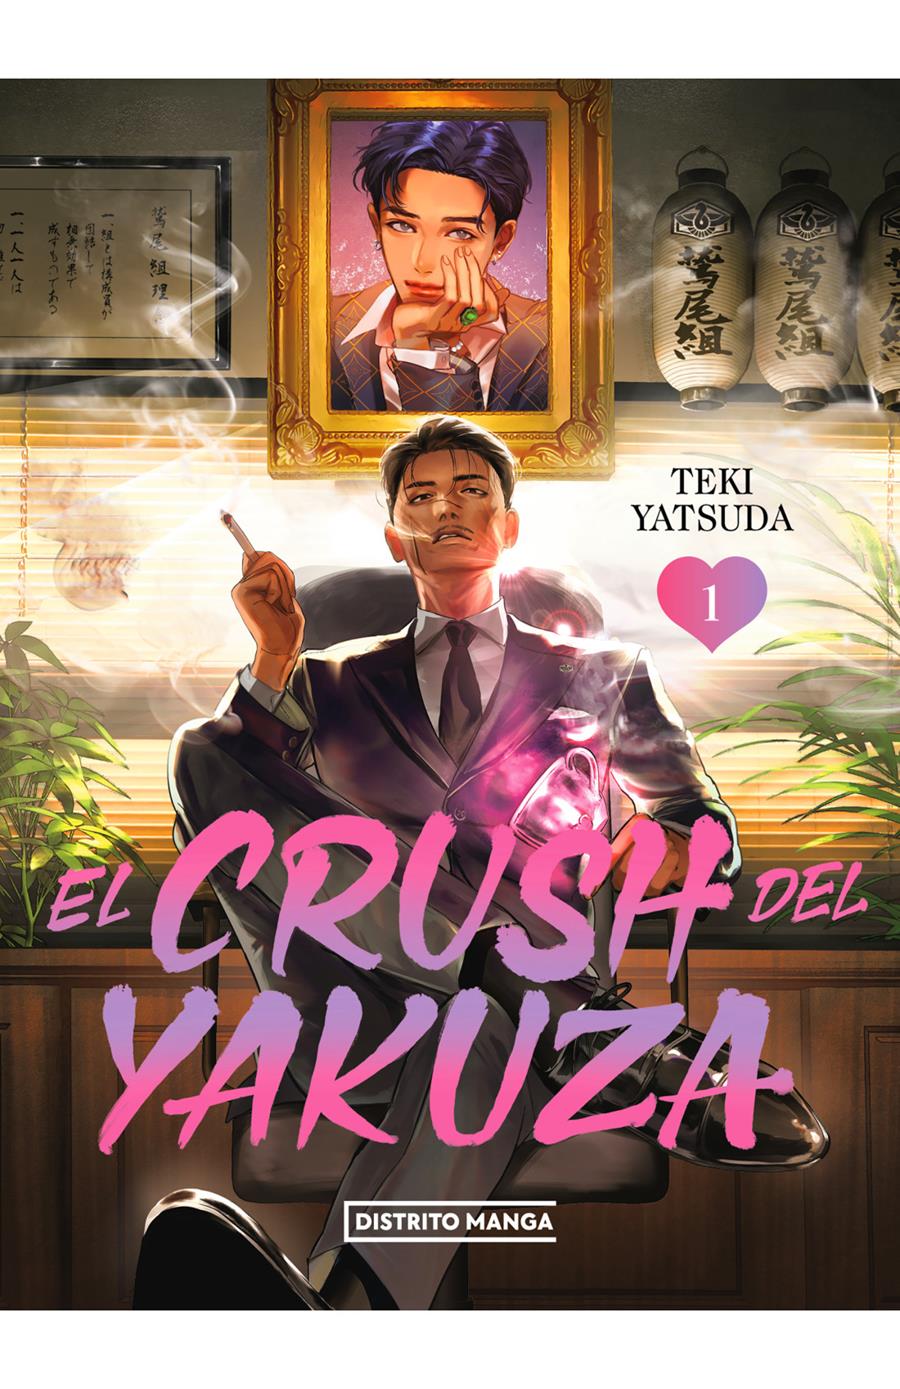 El crush del yakuza 01 | N1123-OTED23 | Teki Yatsuda | Terra de Còmic - Tu tienda de cómics online especializada en cómics, manga y merchandising